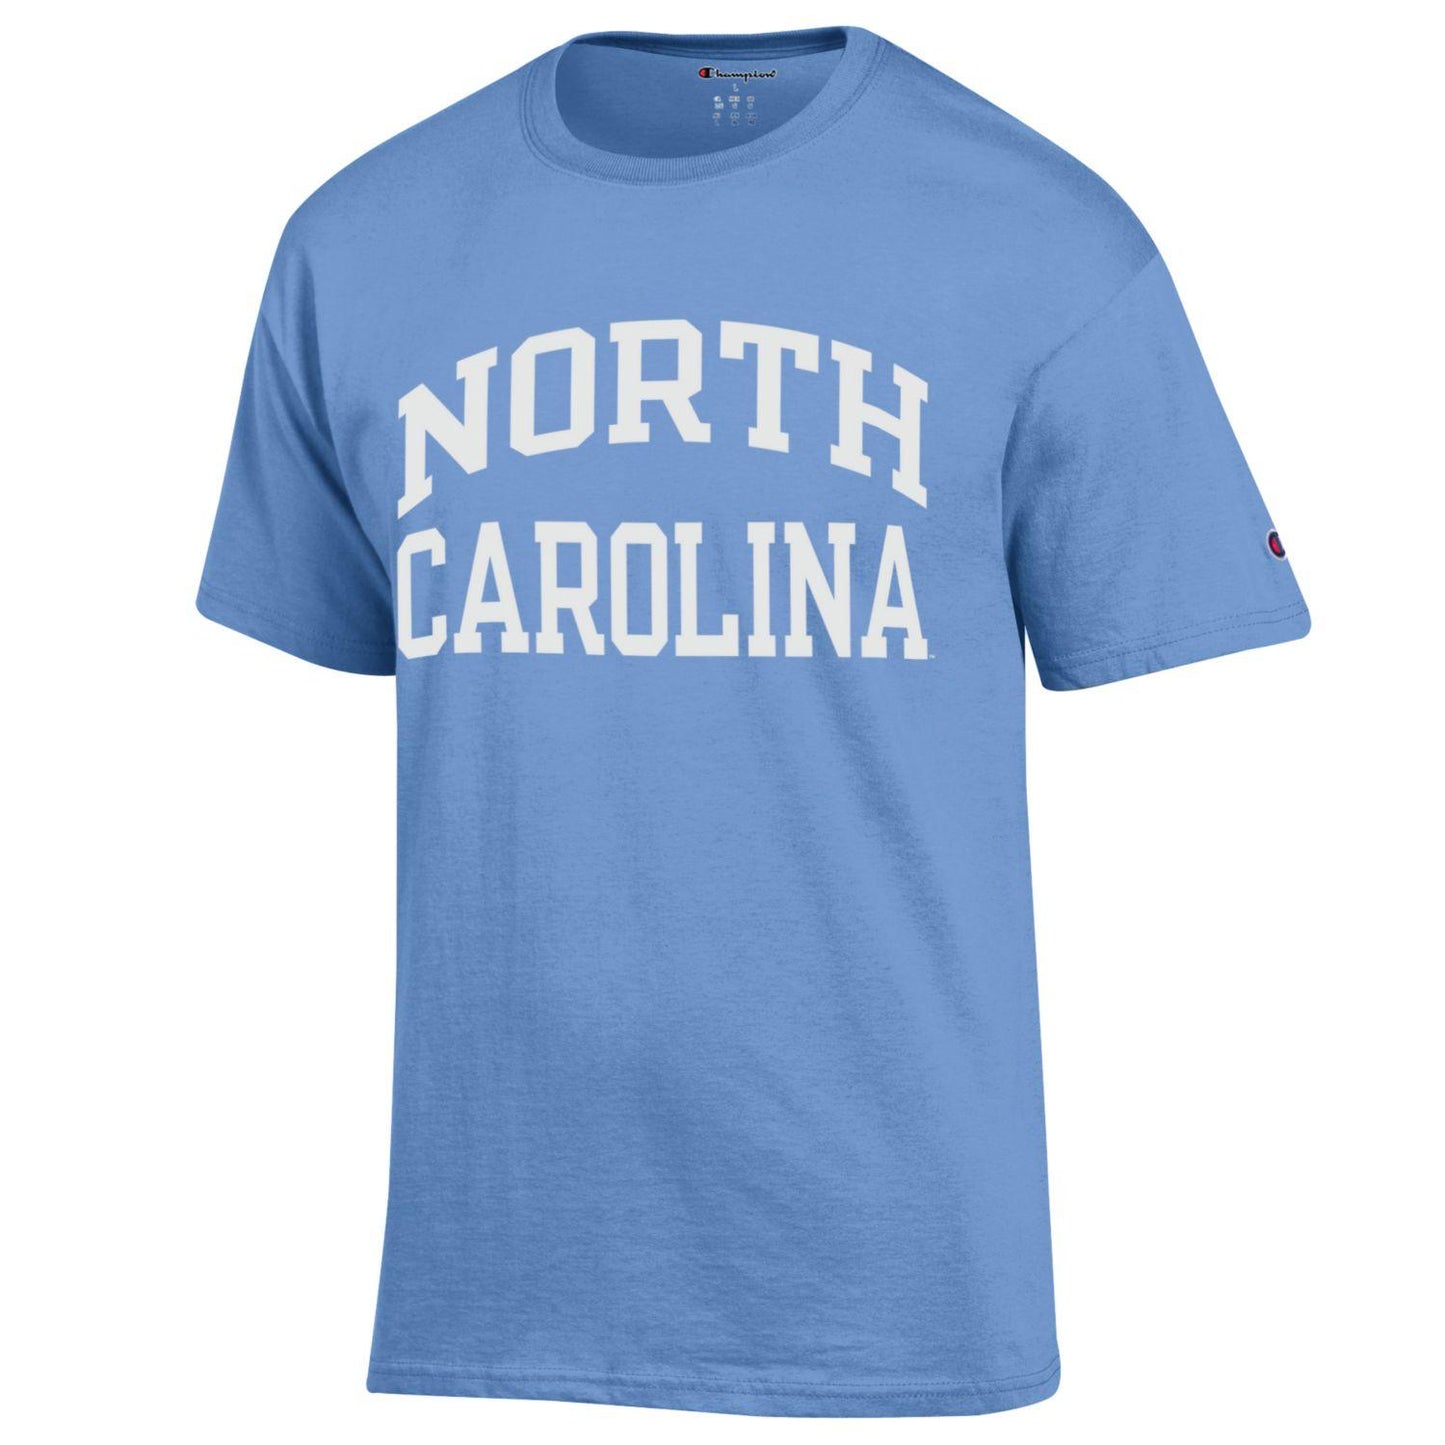 North Carolina T-Shirt Carolina Blue by Champion